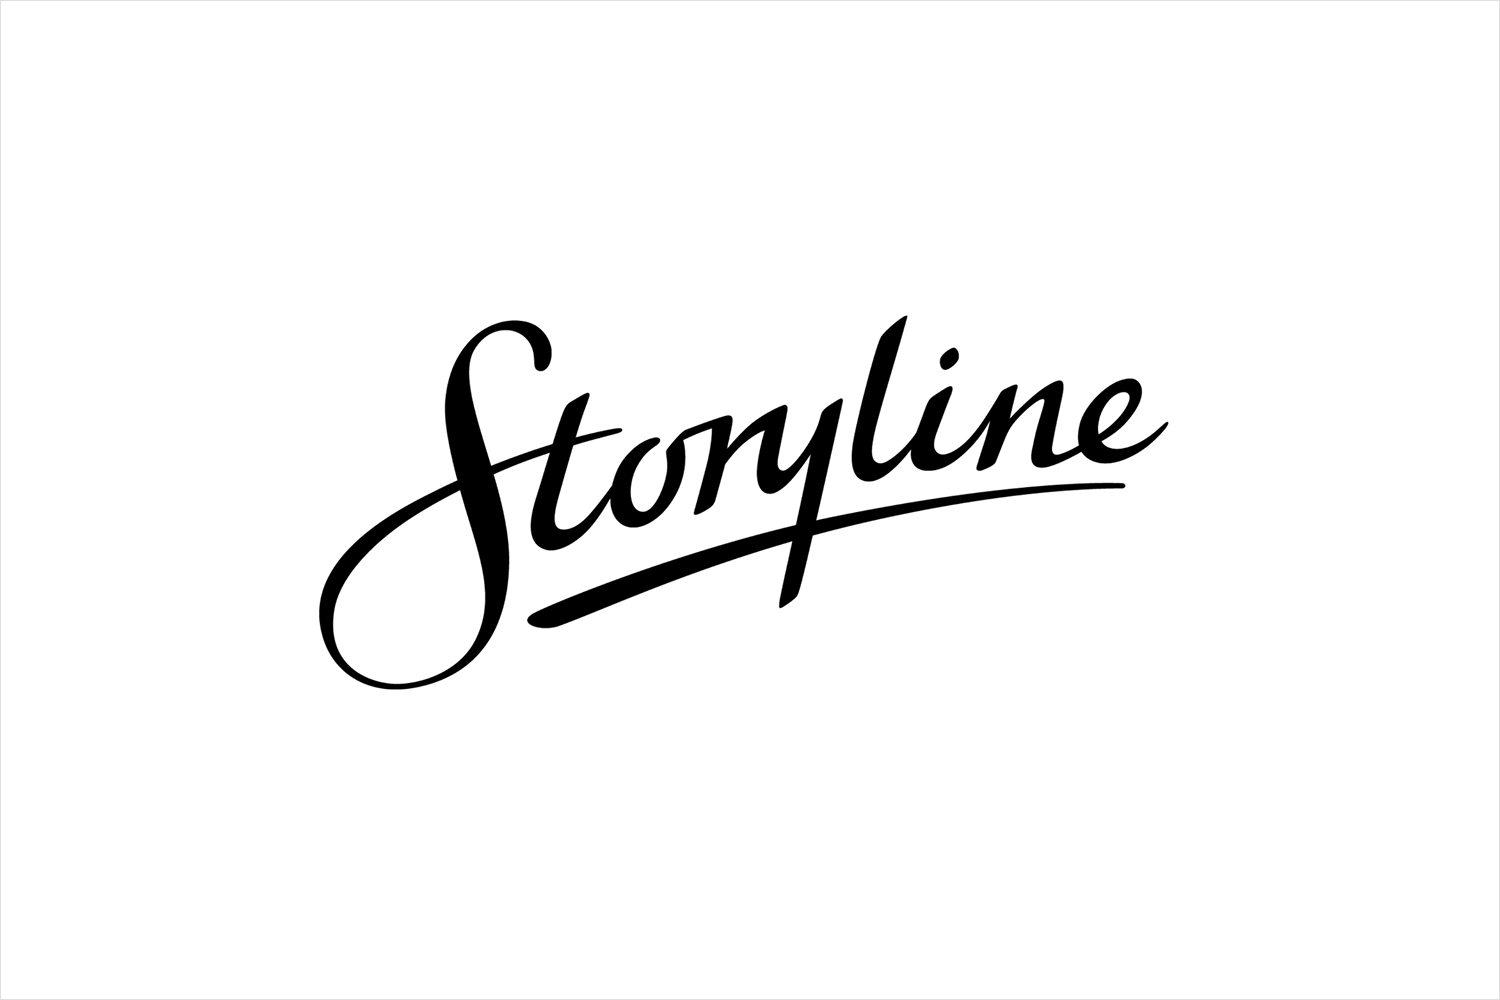 Creative Logotype Gallery & Inspiration: Storyline Studios by Work In Progress, Norway